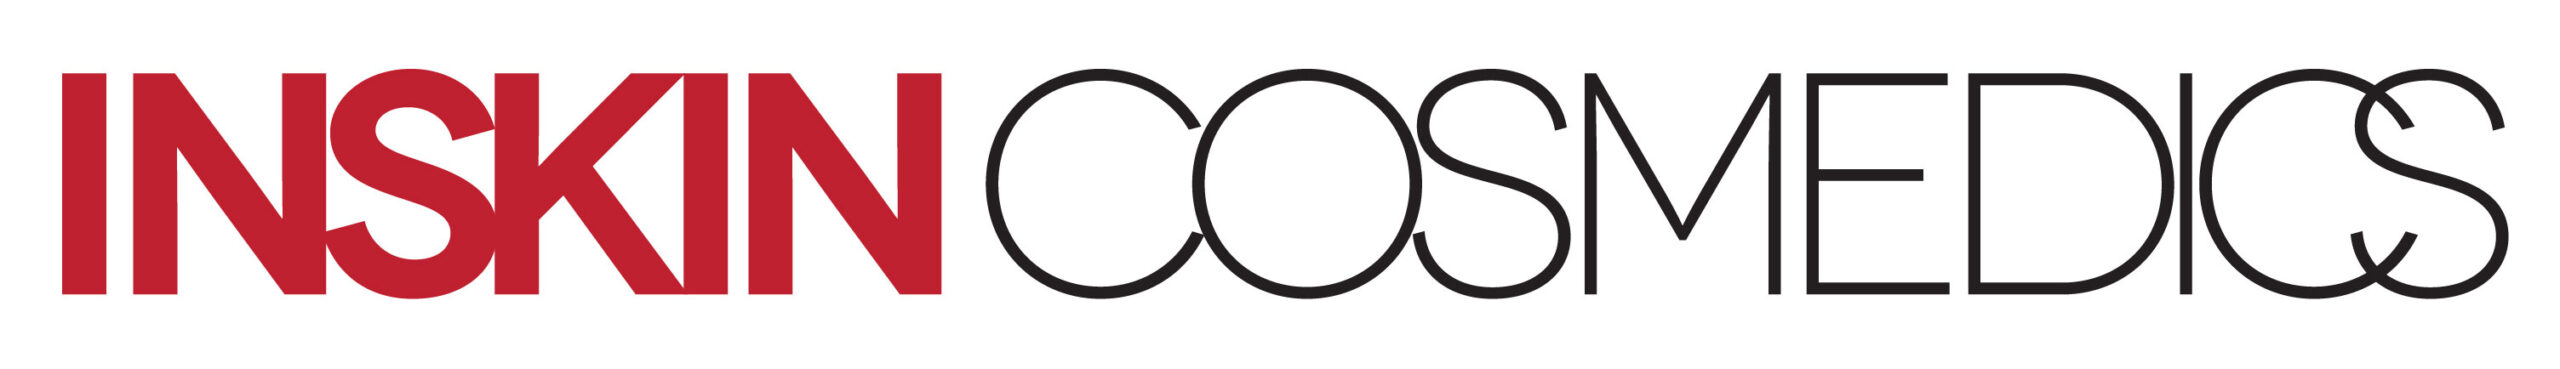 INSKIN COSMEDICS-Logo